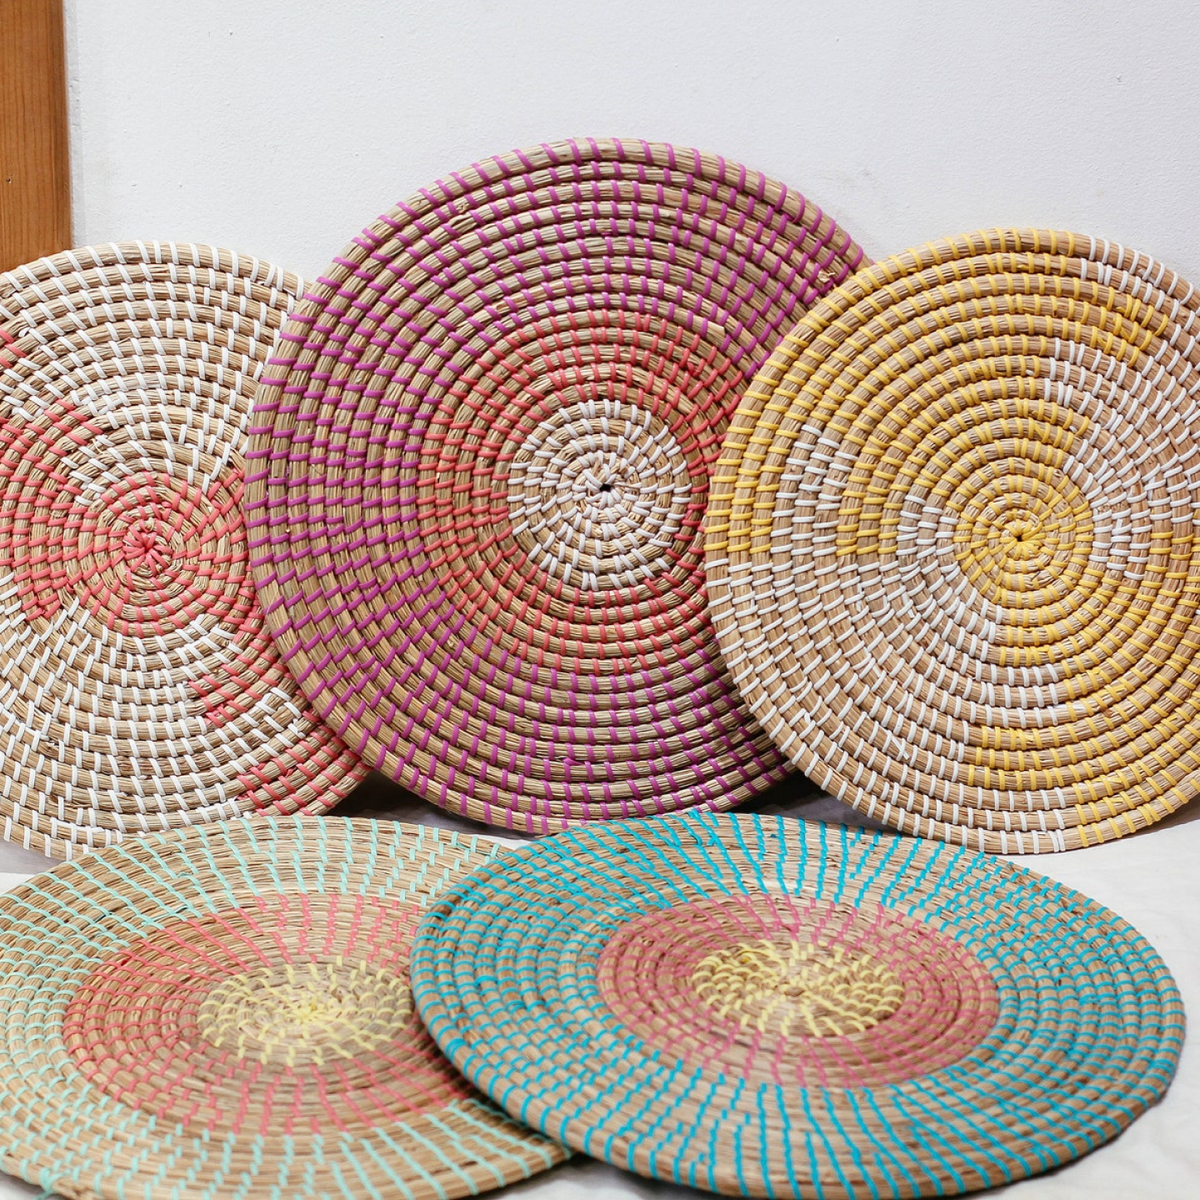 Seagrass weaving handmade Placemat LG